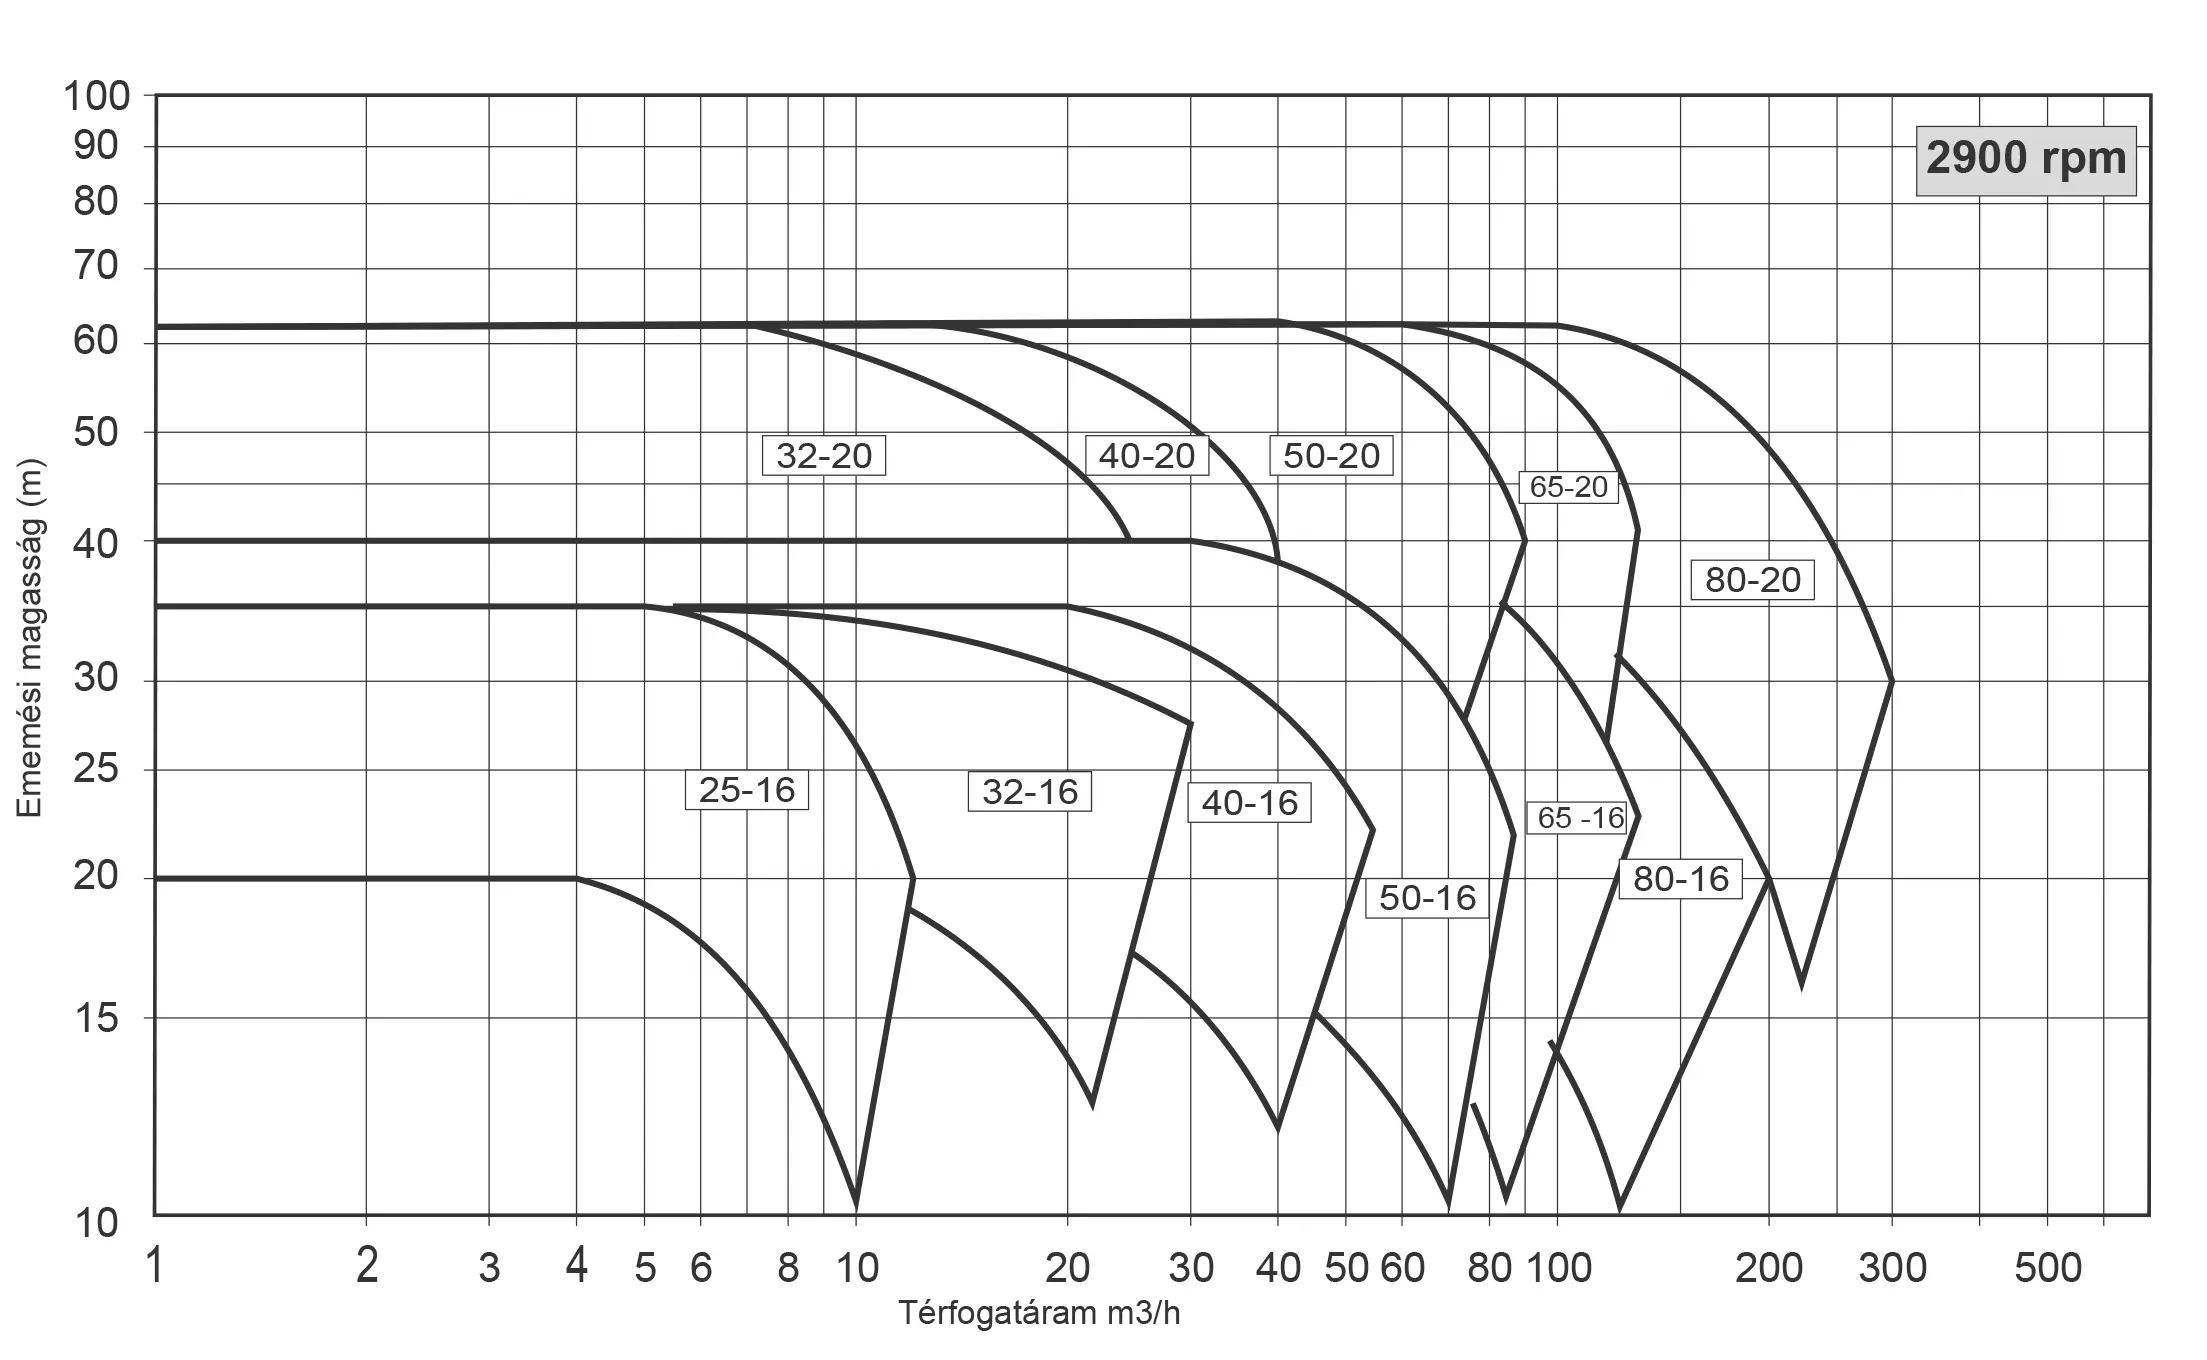 HD Performance curves